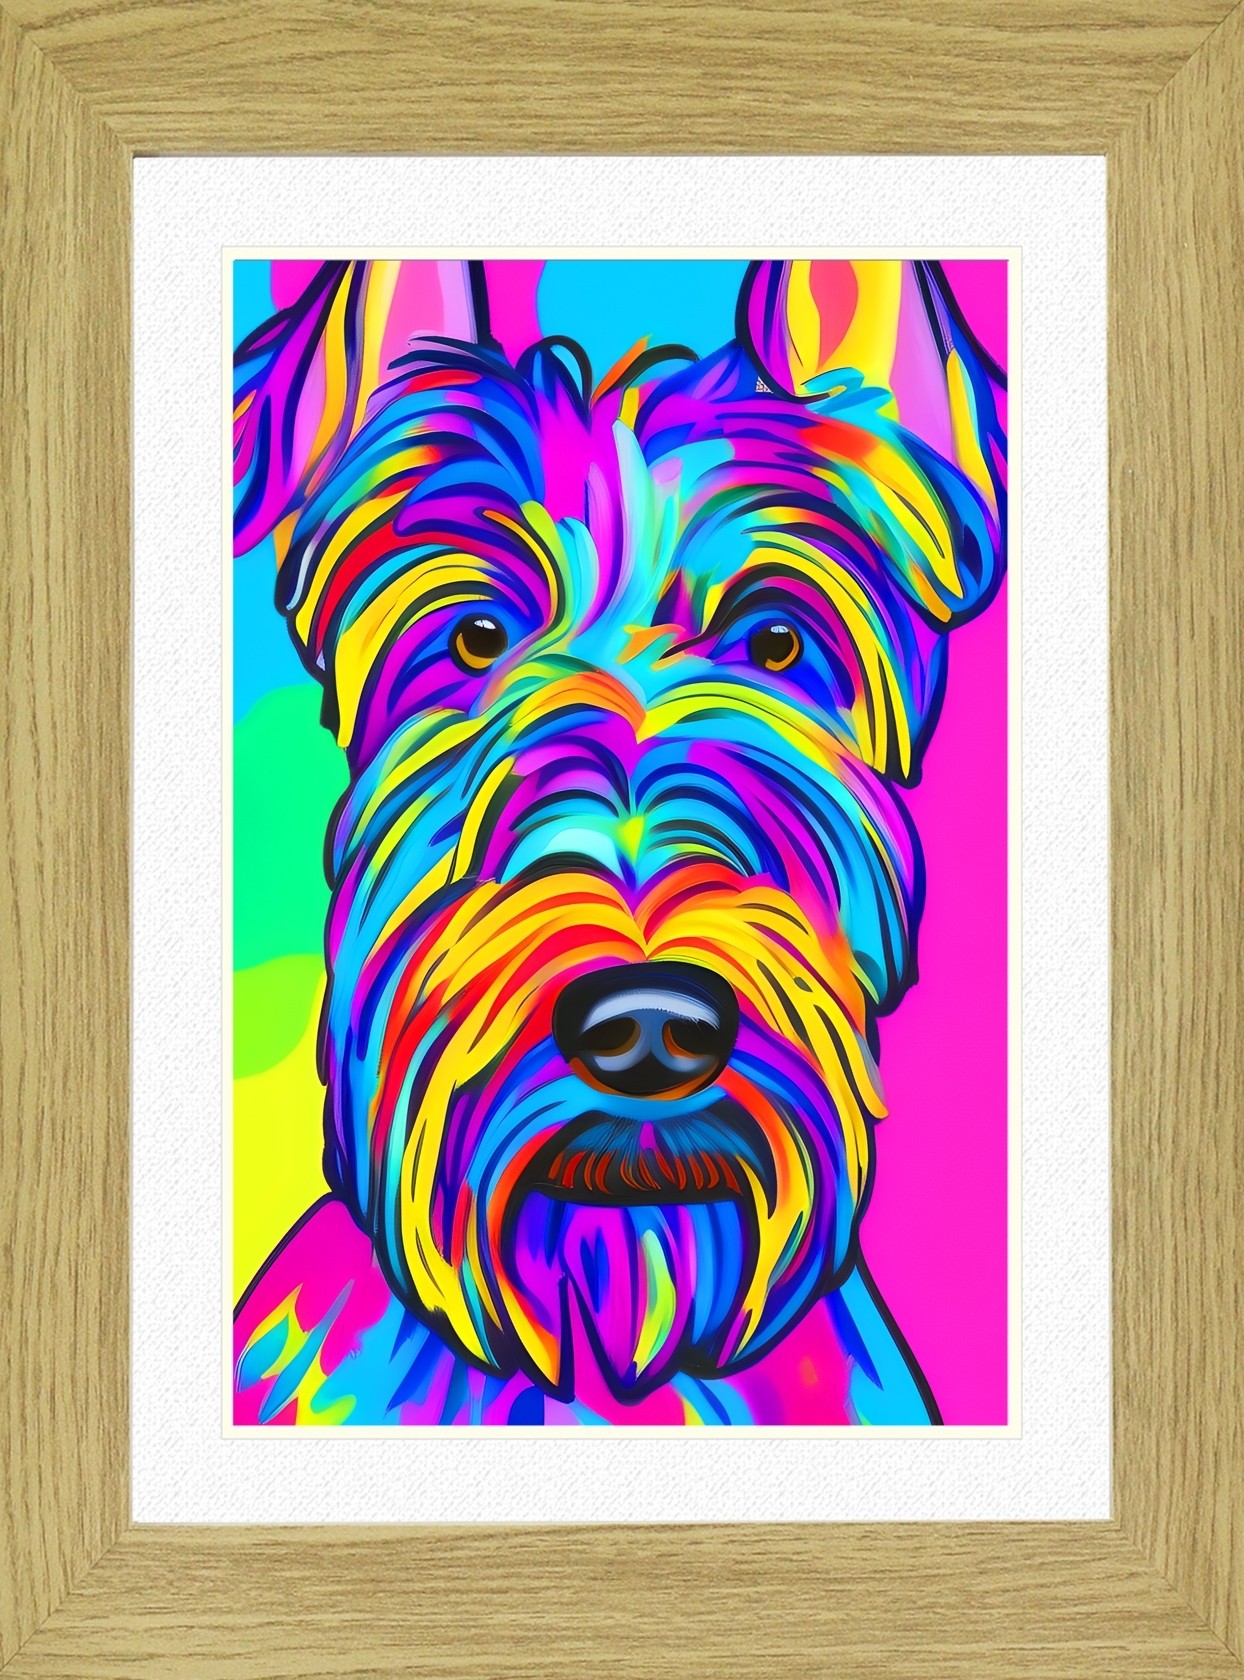 Scottish Terrier Dog Picture Framed Colourful Abstract Art (A3 Light Oak Frame)